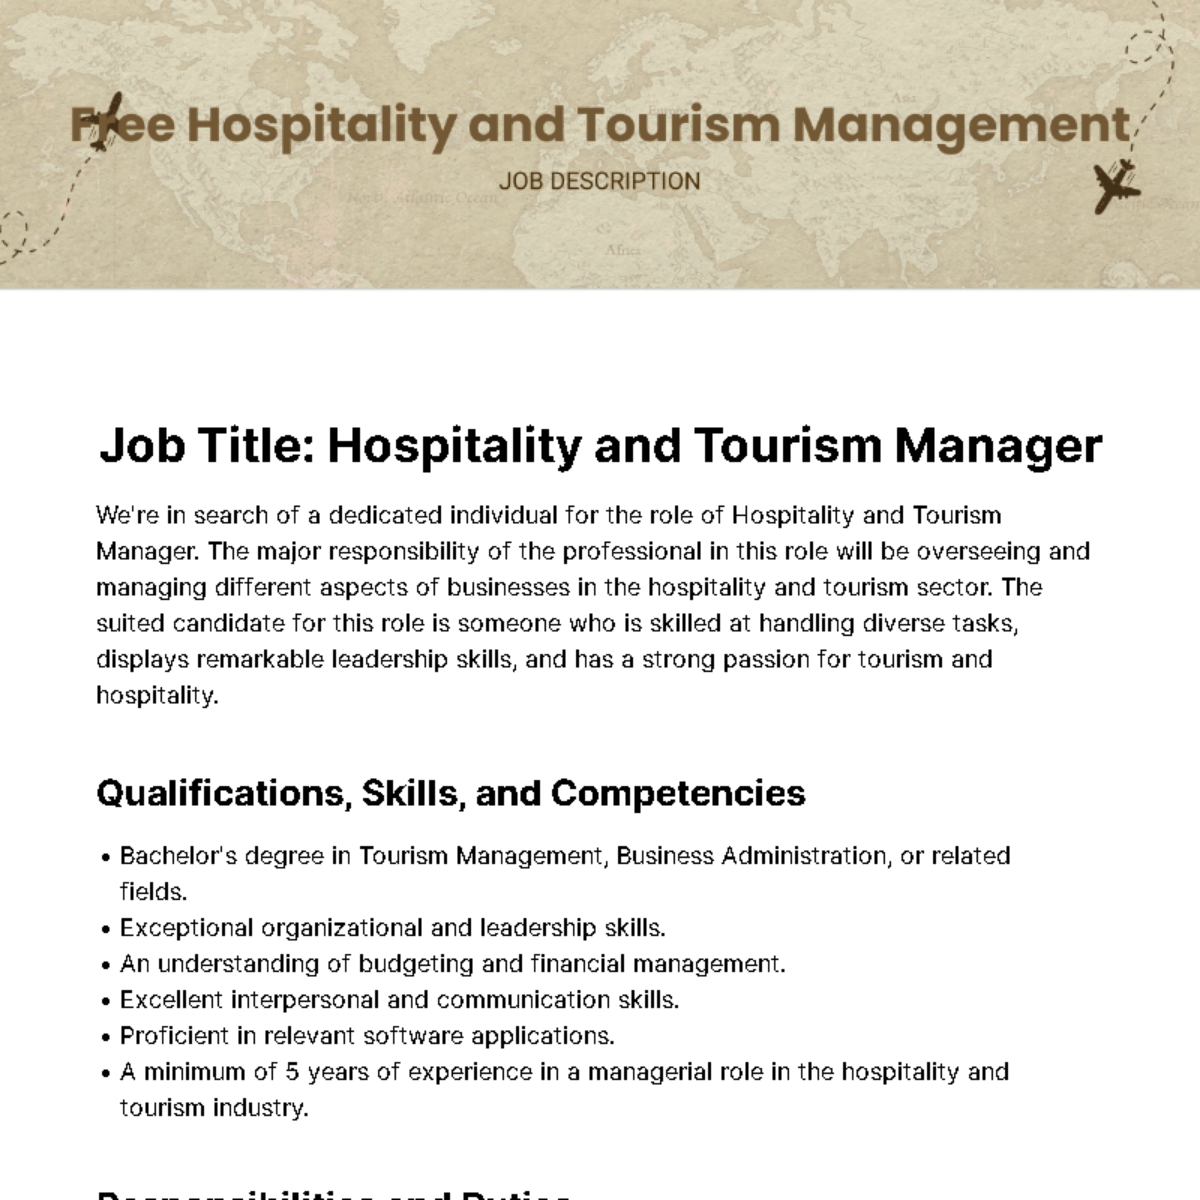 Free Hospitality and Tourism Management Job Description Template